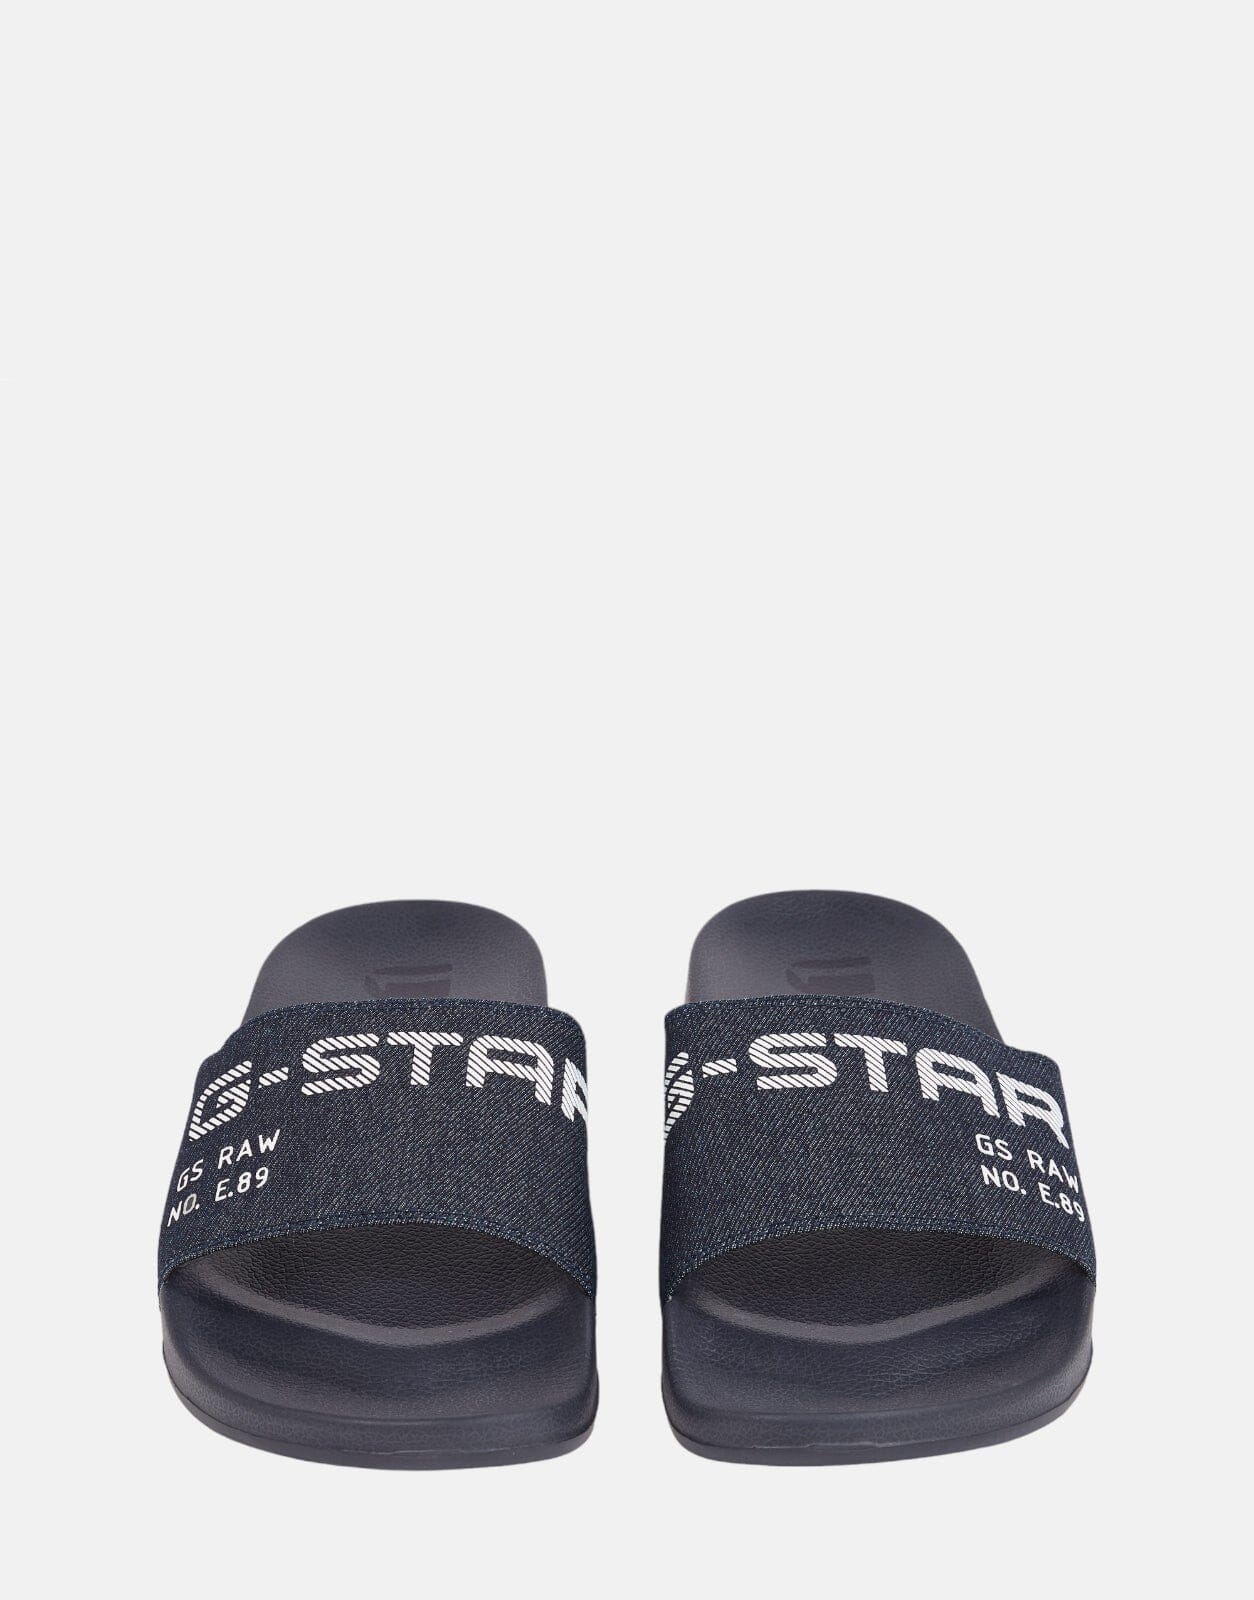 G-Star RAW Cart Denim Dk Navy Slides - Subwear